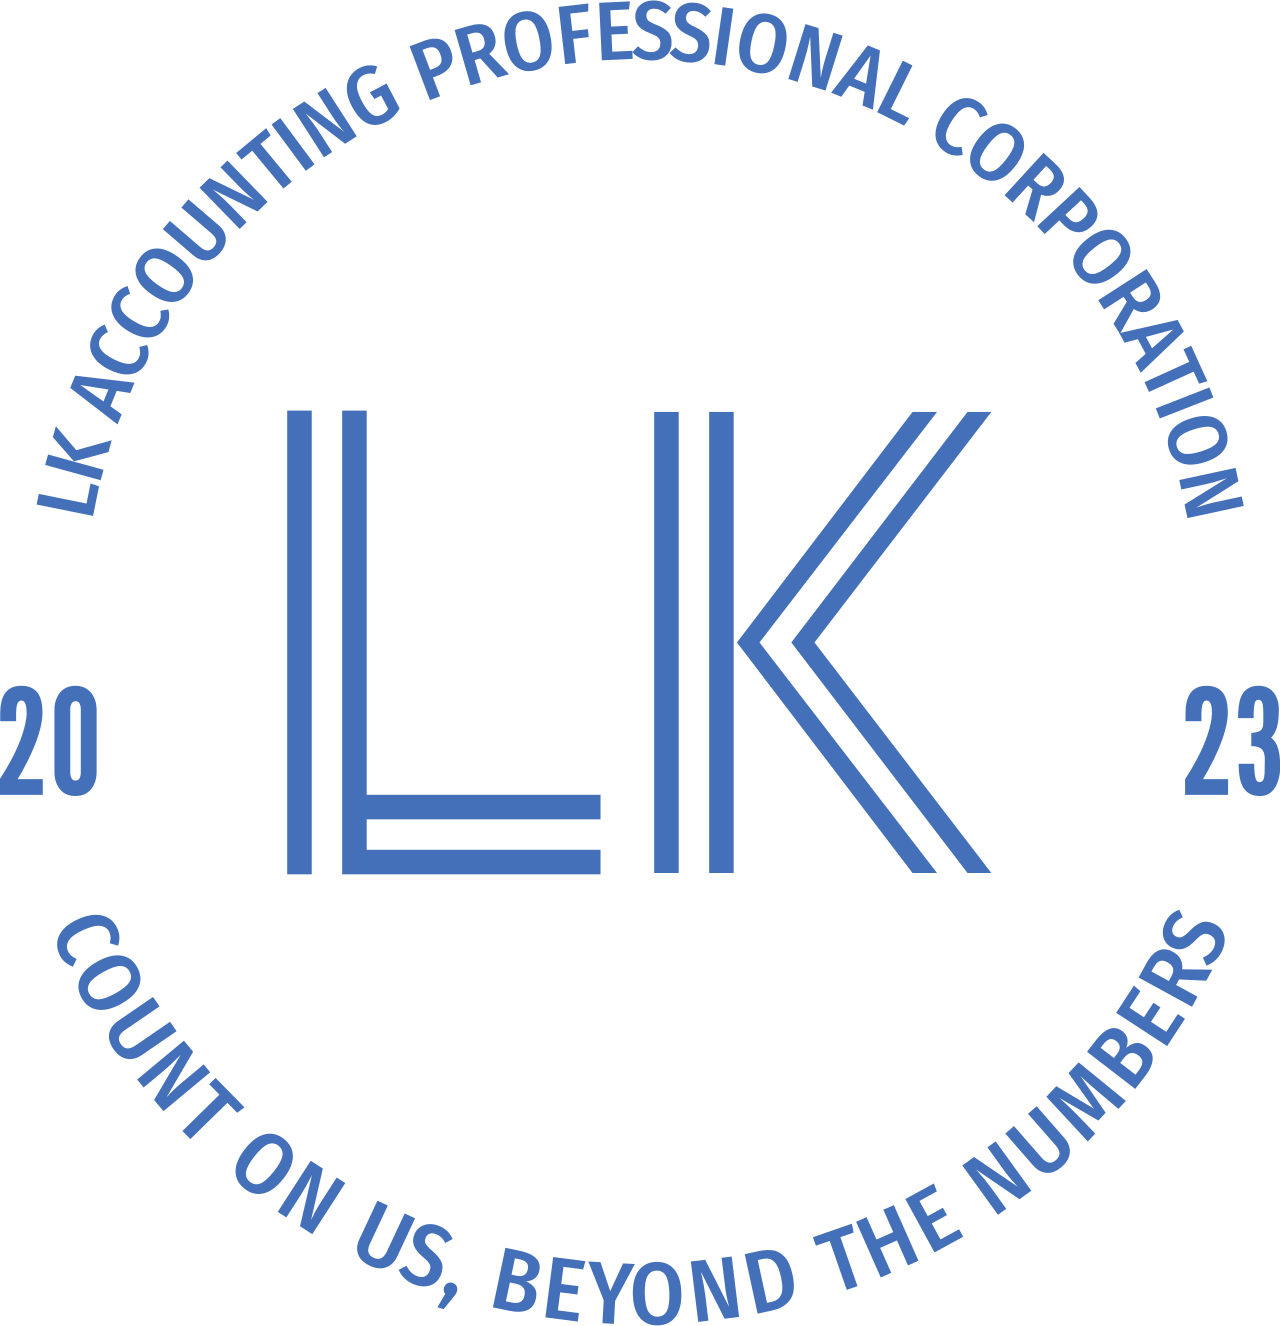 LK Accounting Professional Corporation's logo